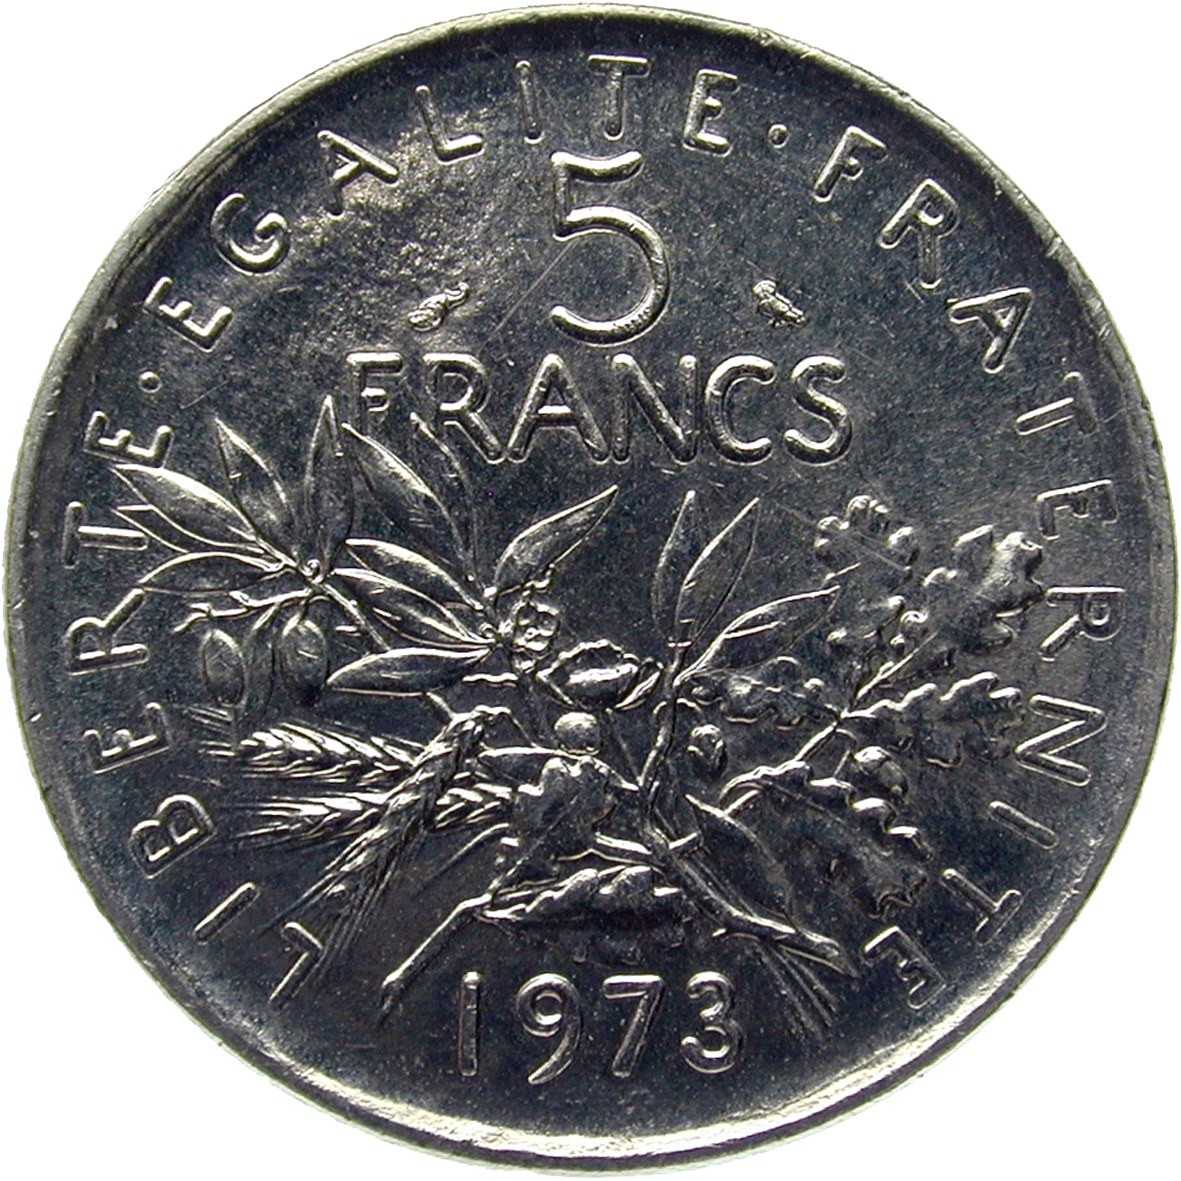 Republic of France, 5 Francs 1973 (reverse)